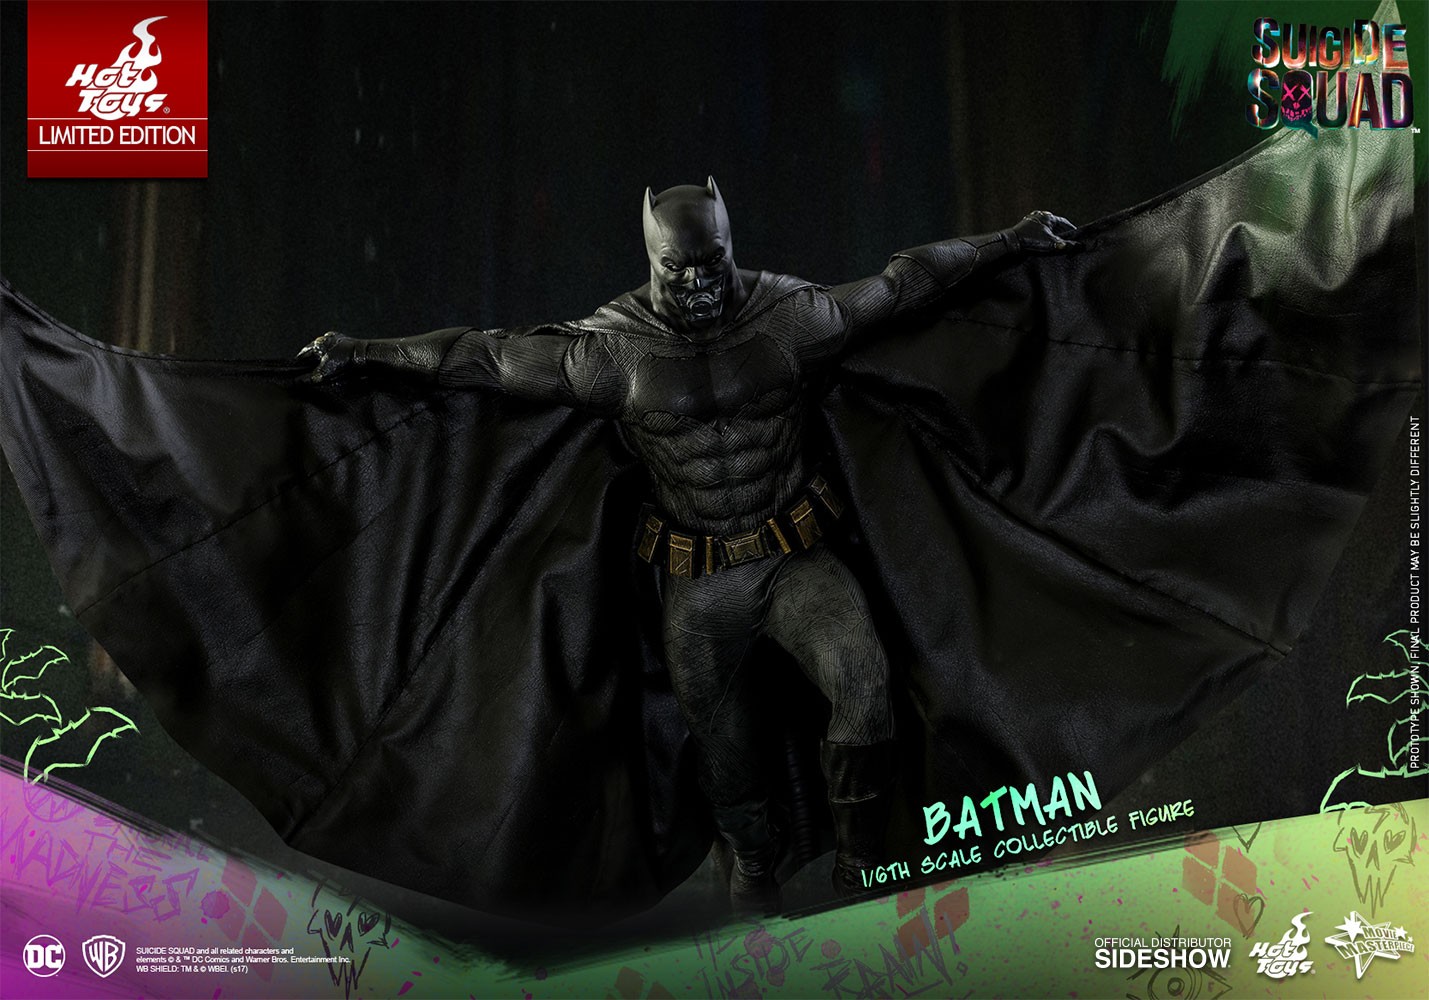 Batman Exclusive Edition (Prototype Shown) View 20